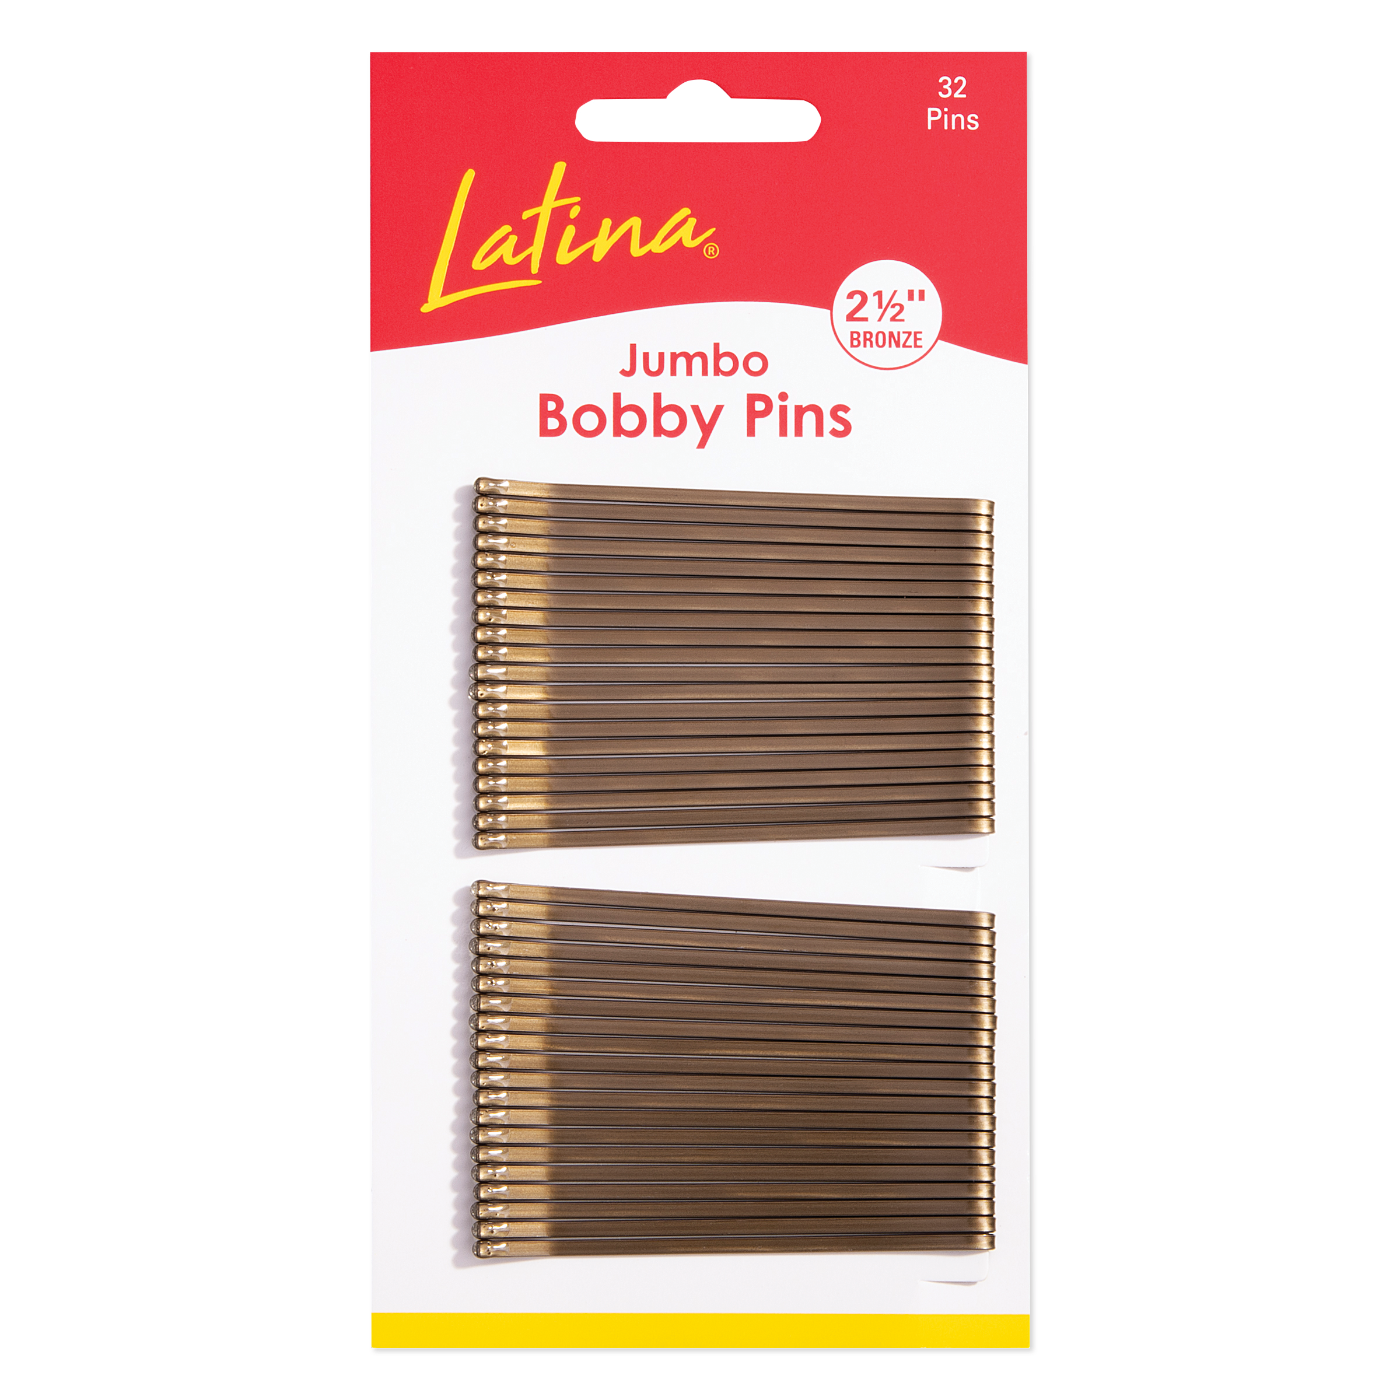 Bobby Pins, Bronze, Extra-long - 2-1/2"